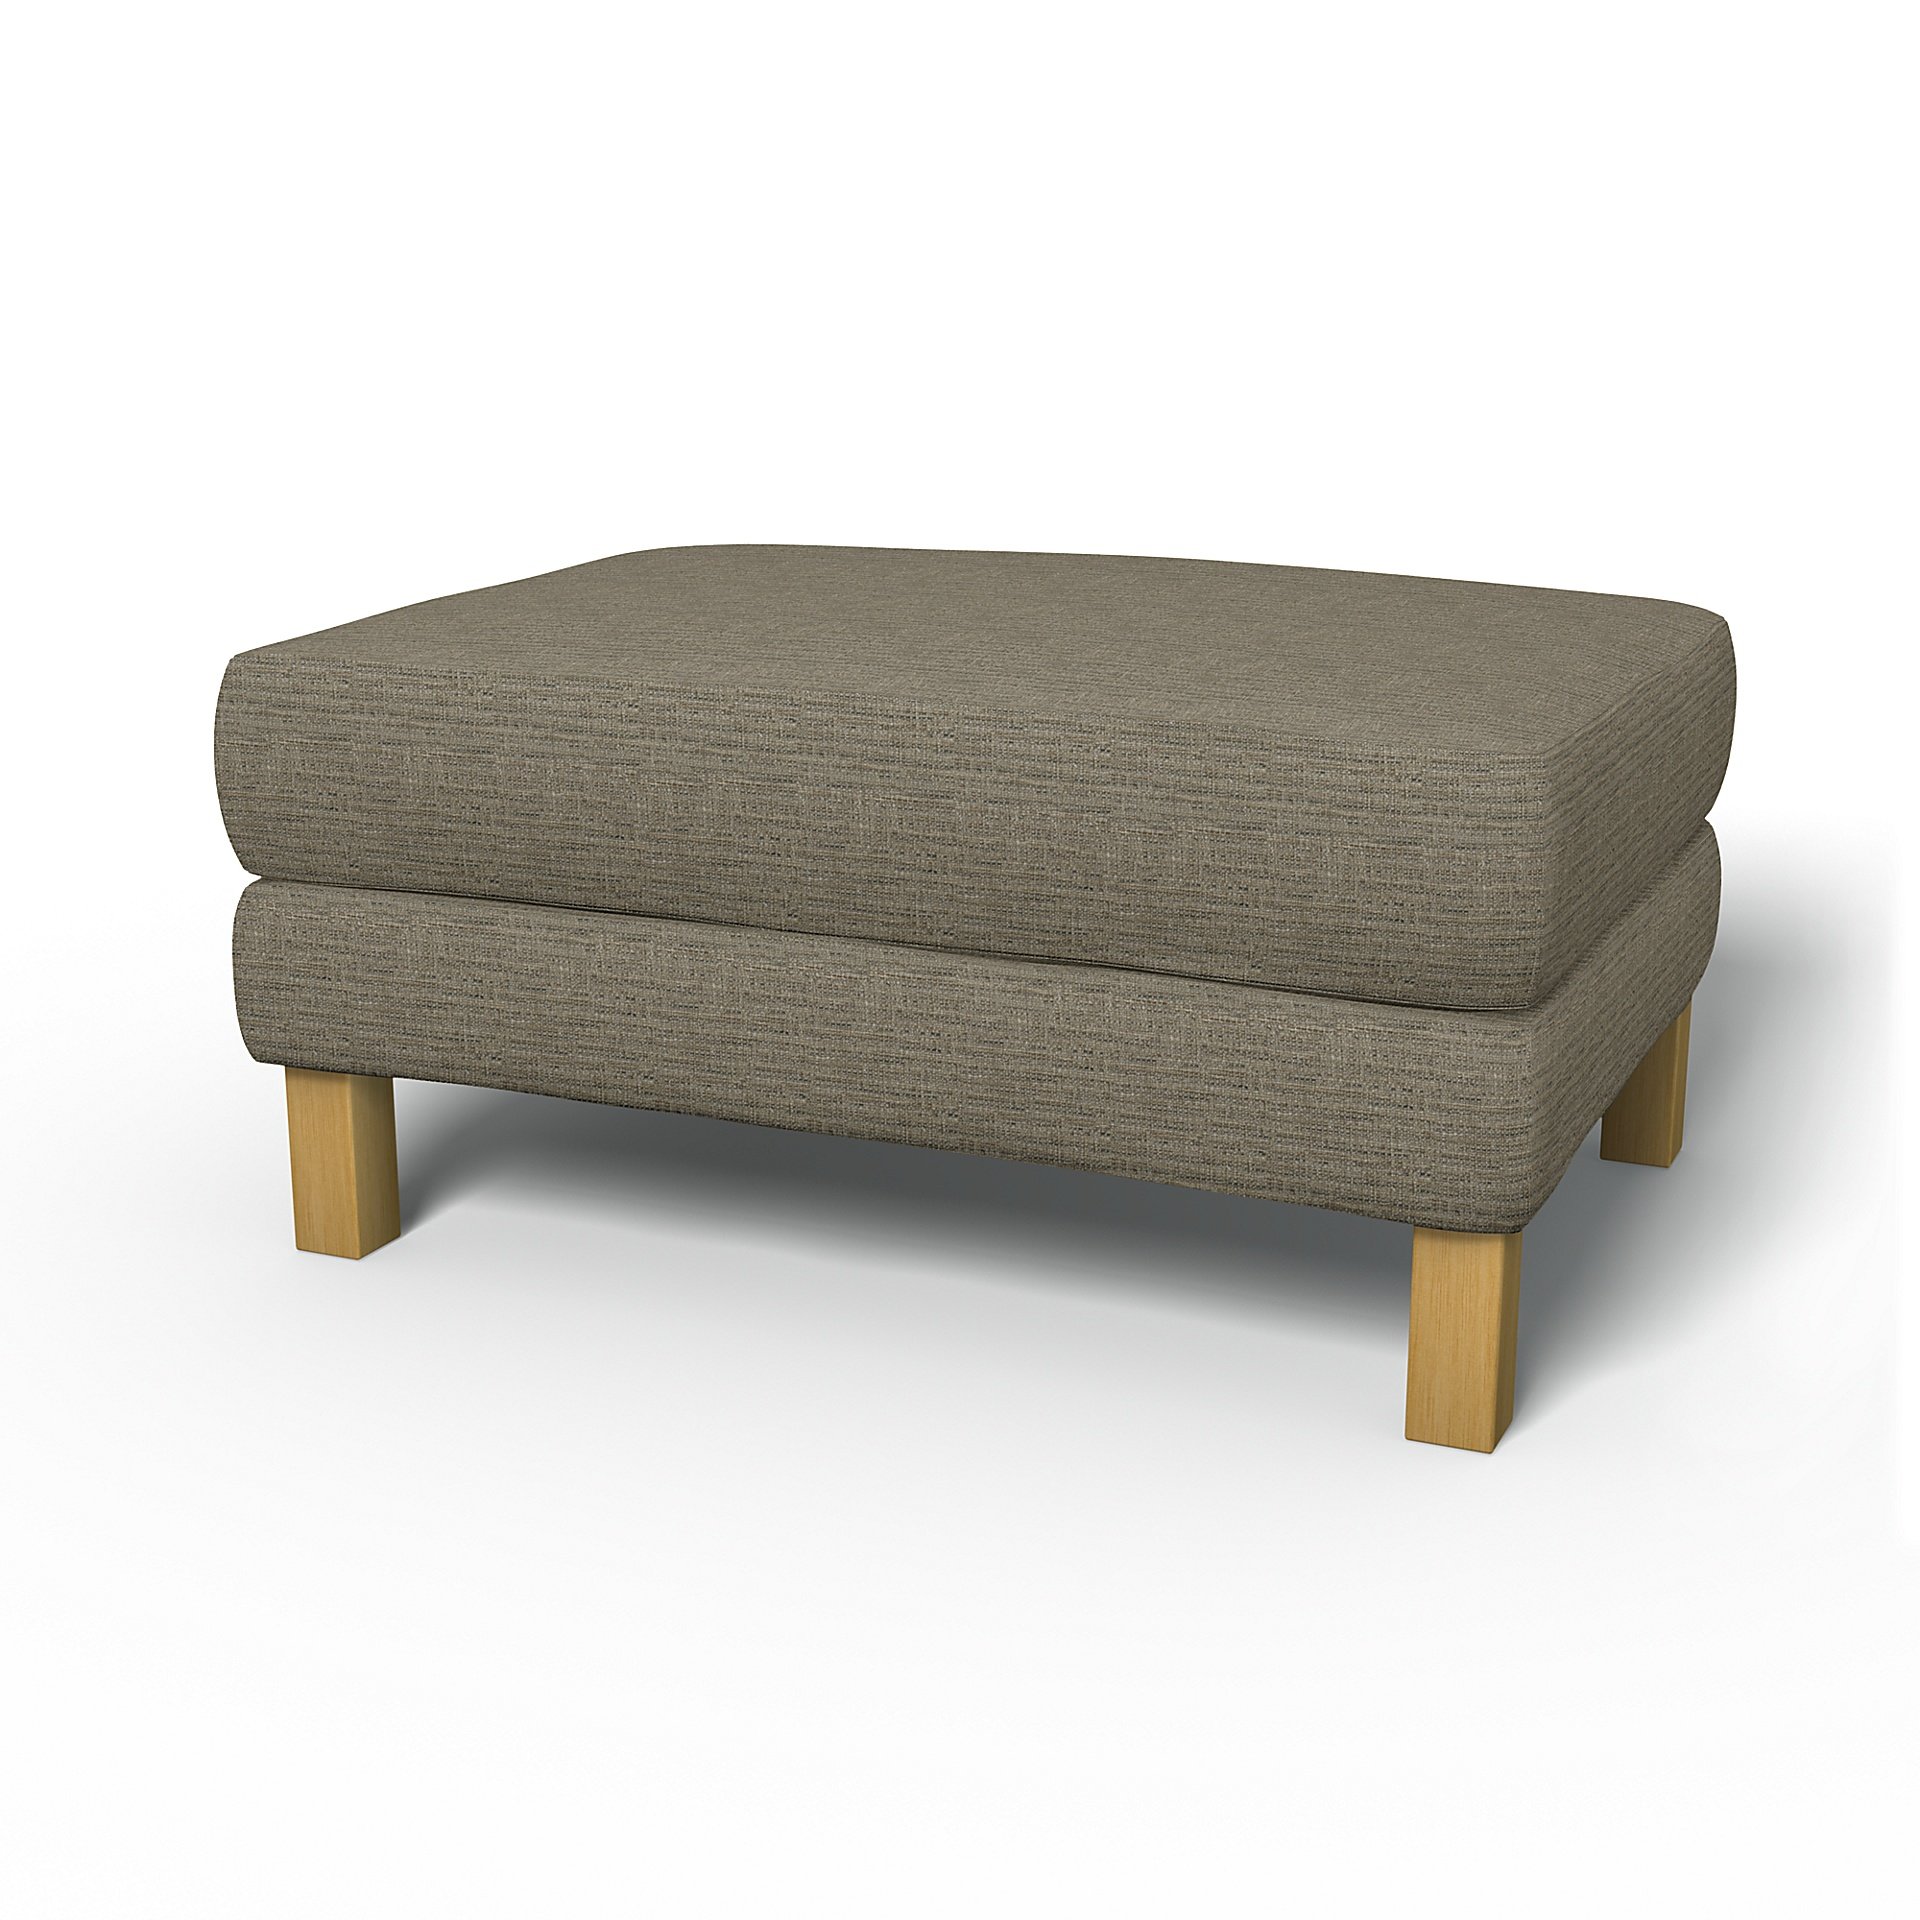 IKEA - Karlstad Footstool Cover, Mole Brown, Boucle & Texture - Bemz